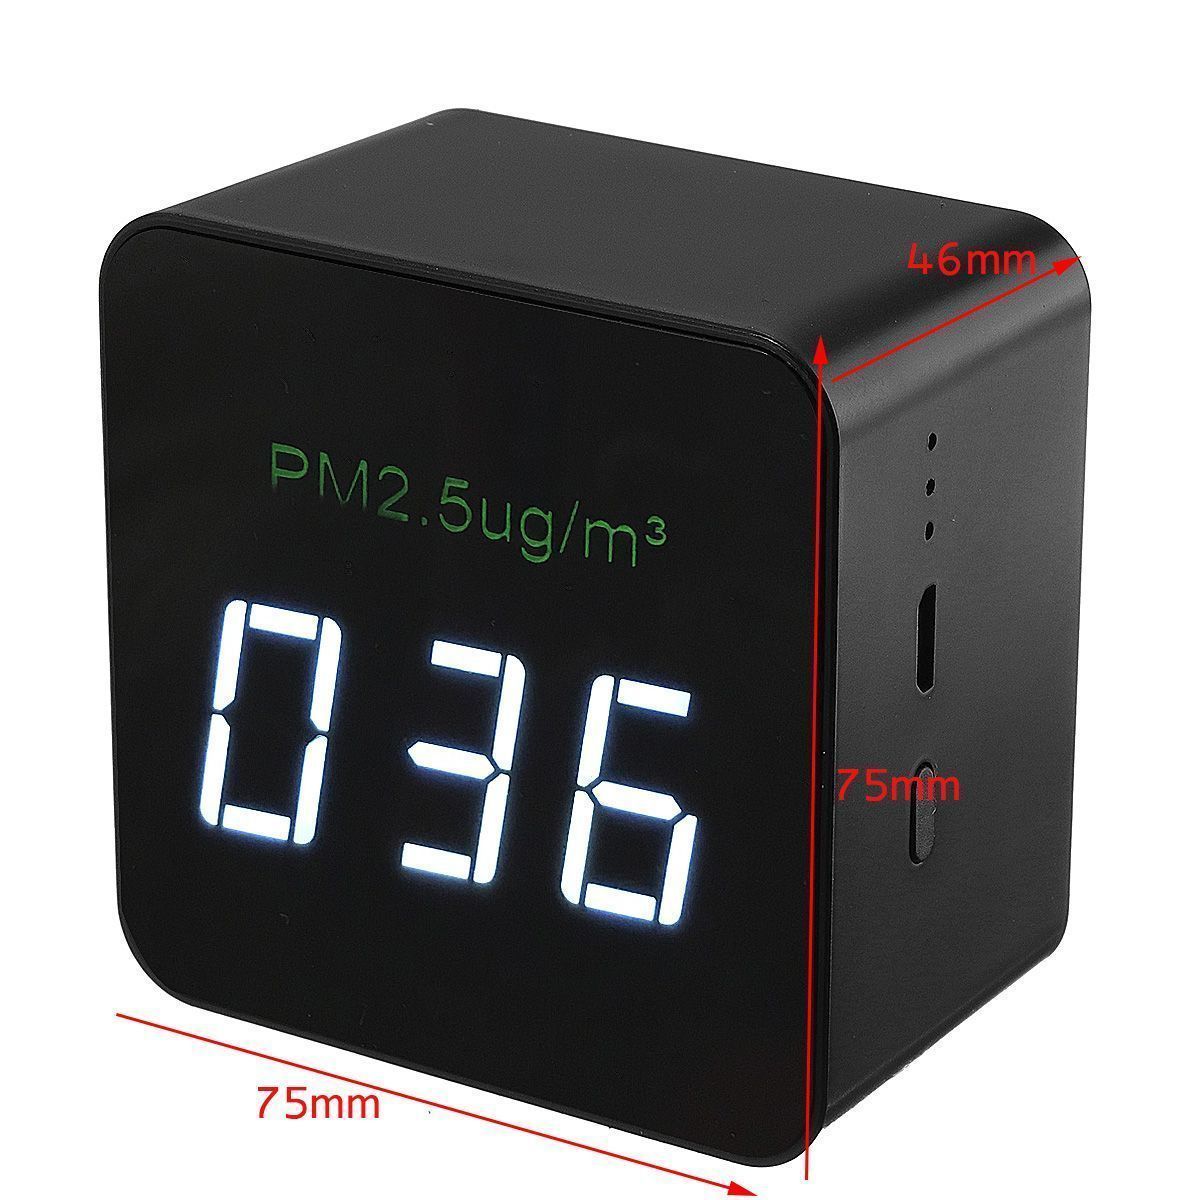 Portable-Digital-PM25-Detector-Air-Quality-Monitor-Meter-Tester-1469906